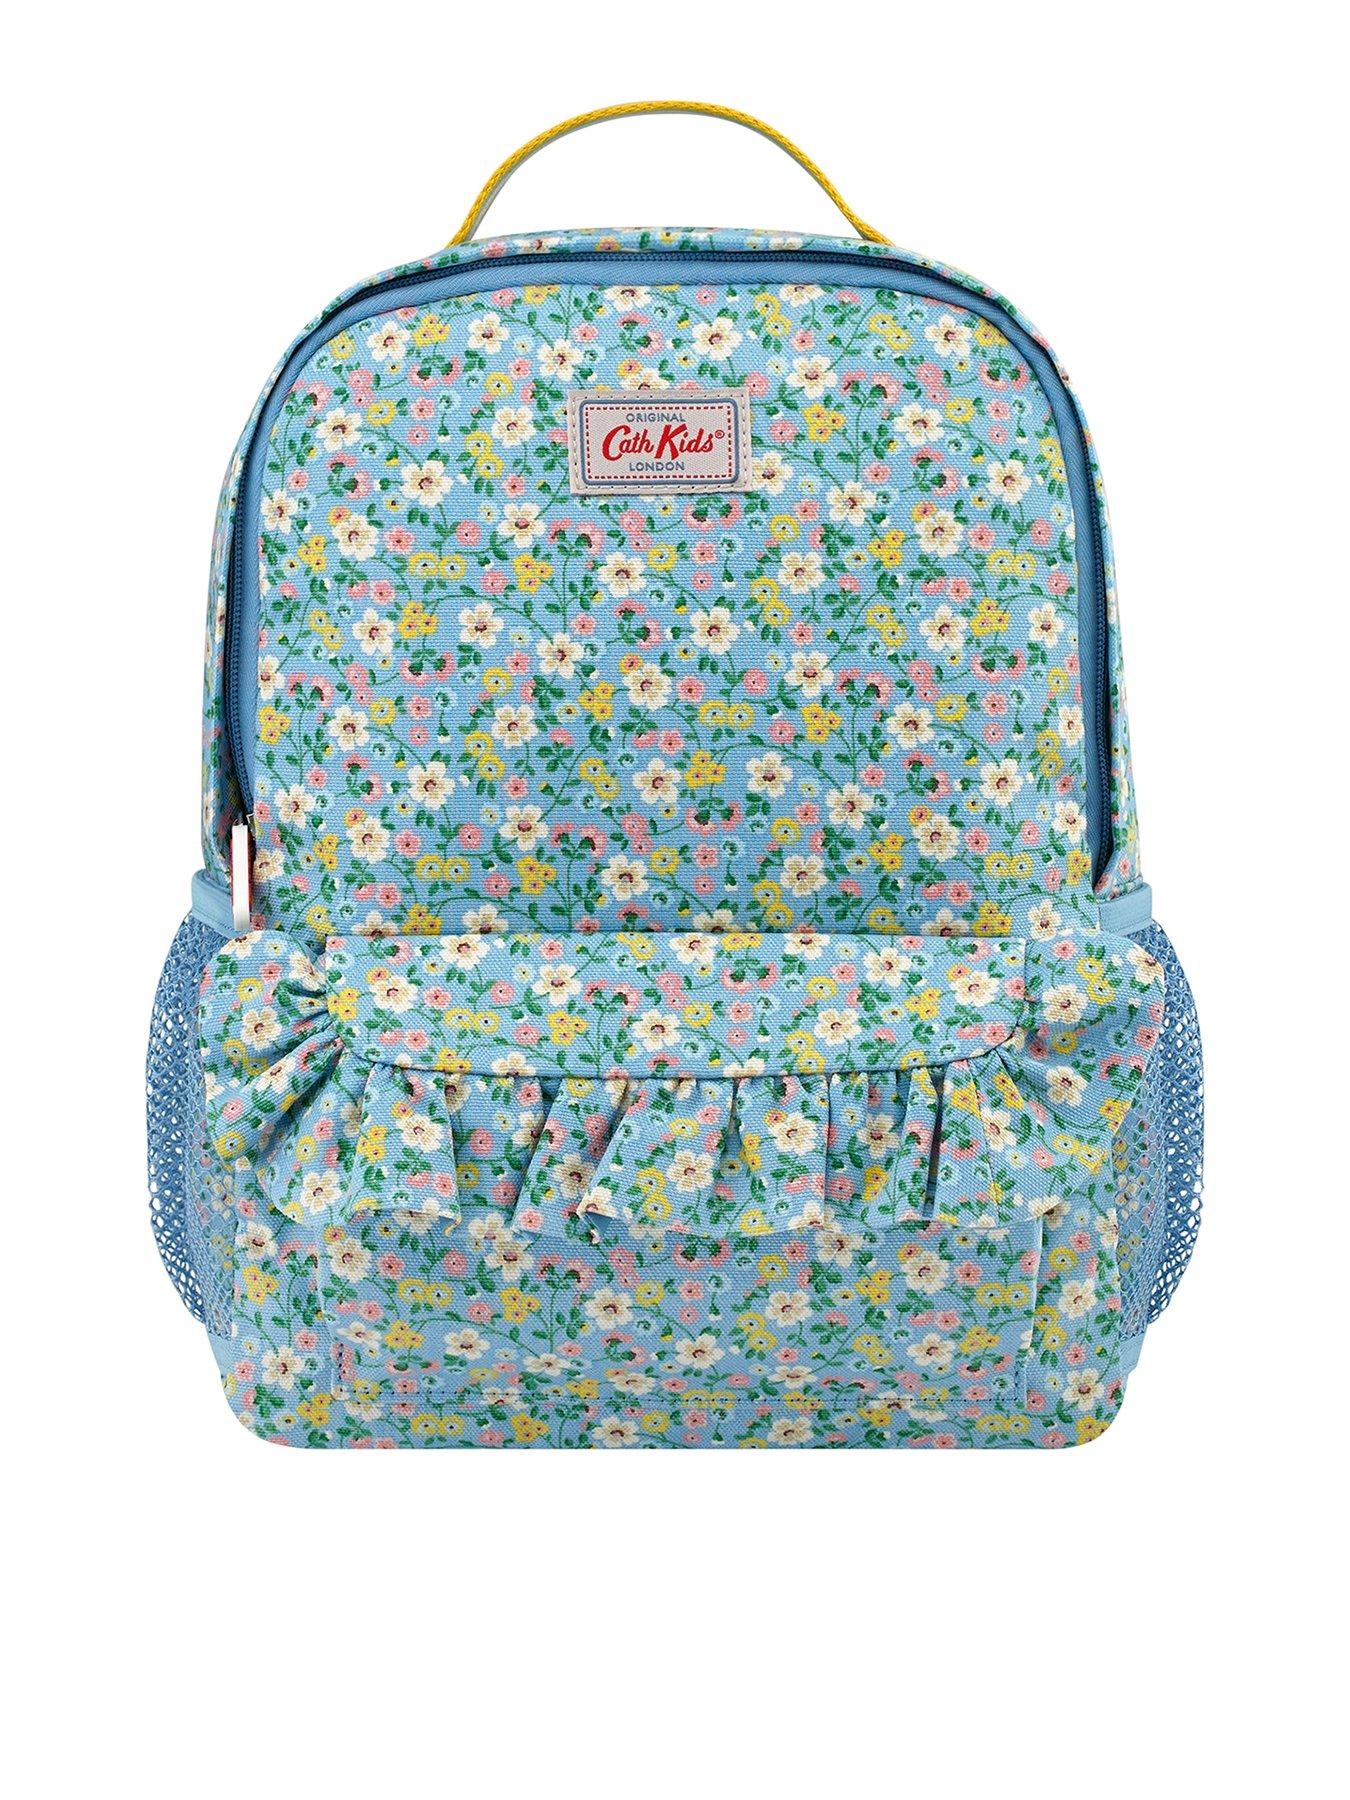 Accessories Girls Pembridge Floral Large Backpack - Blue